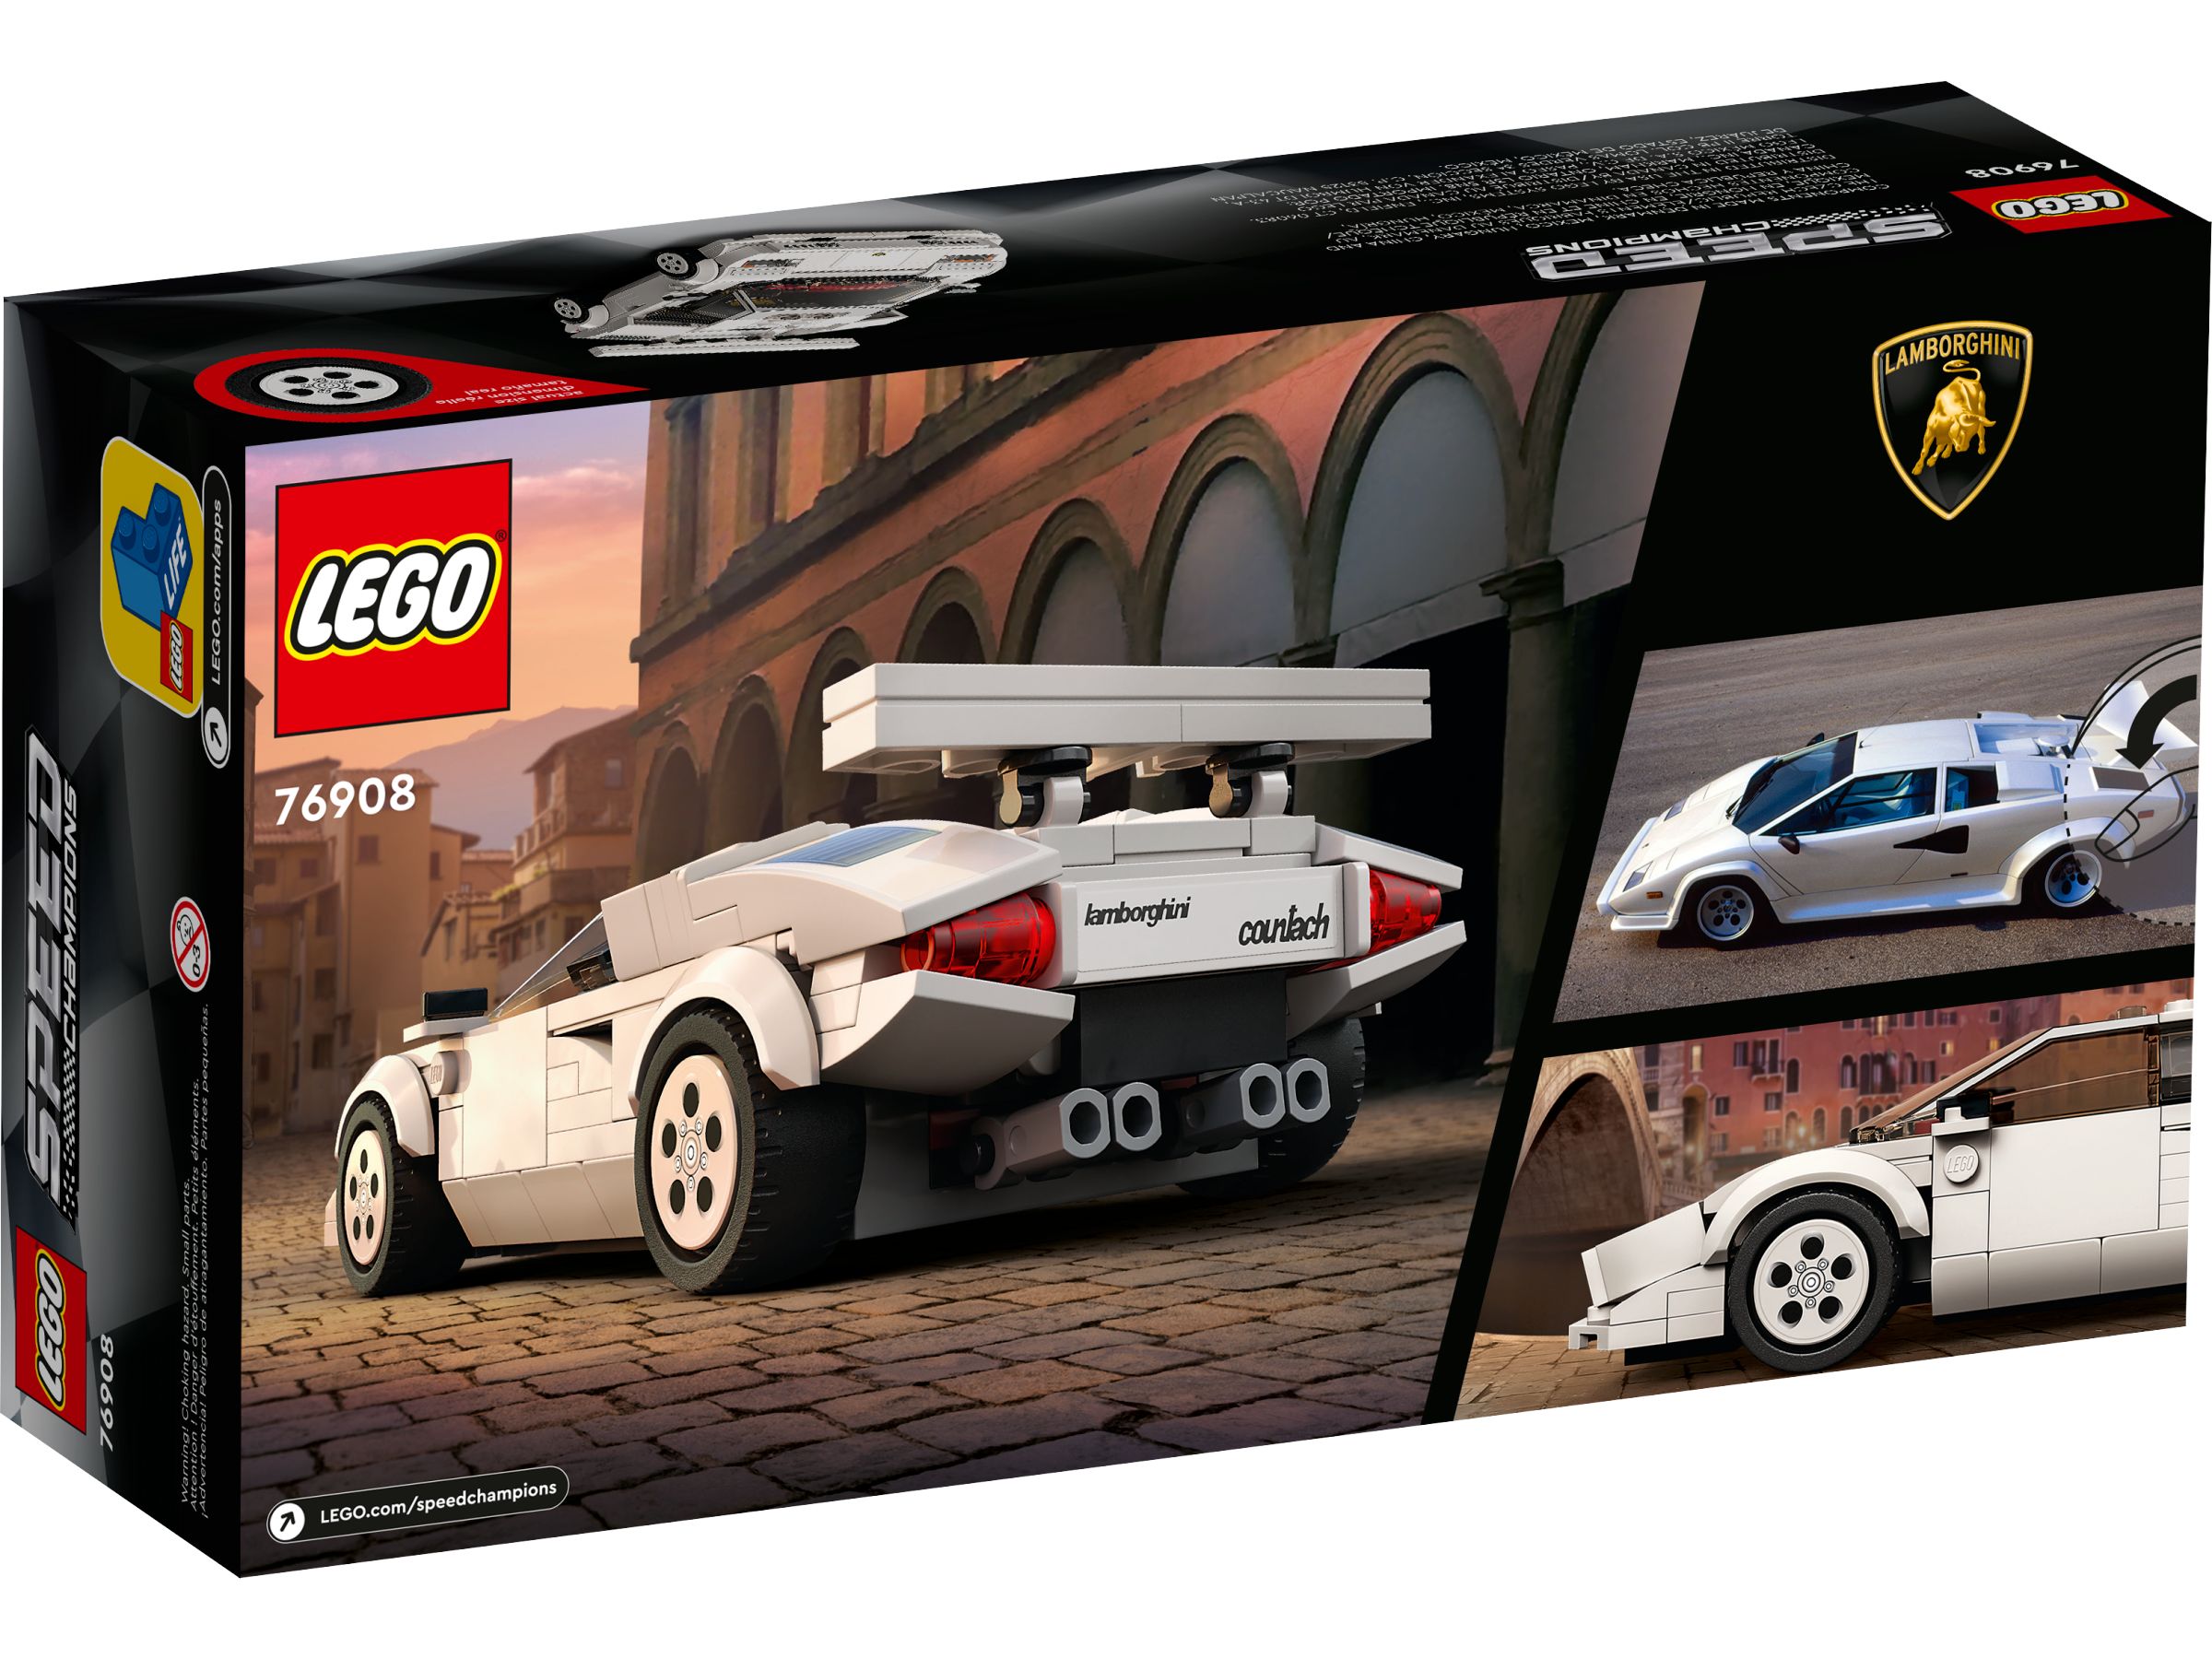 LEGO Speed Champions 76908 Lamborghini Countach LEGO_76908_alt2.jpg